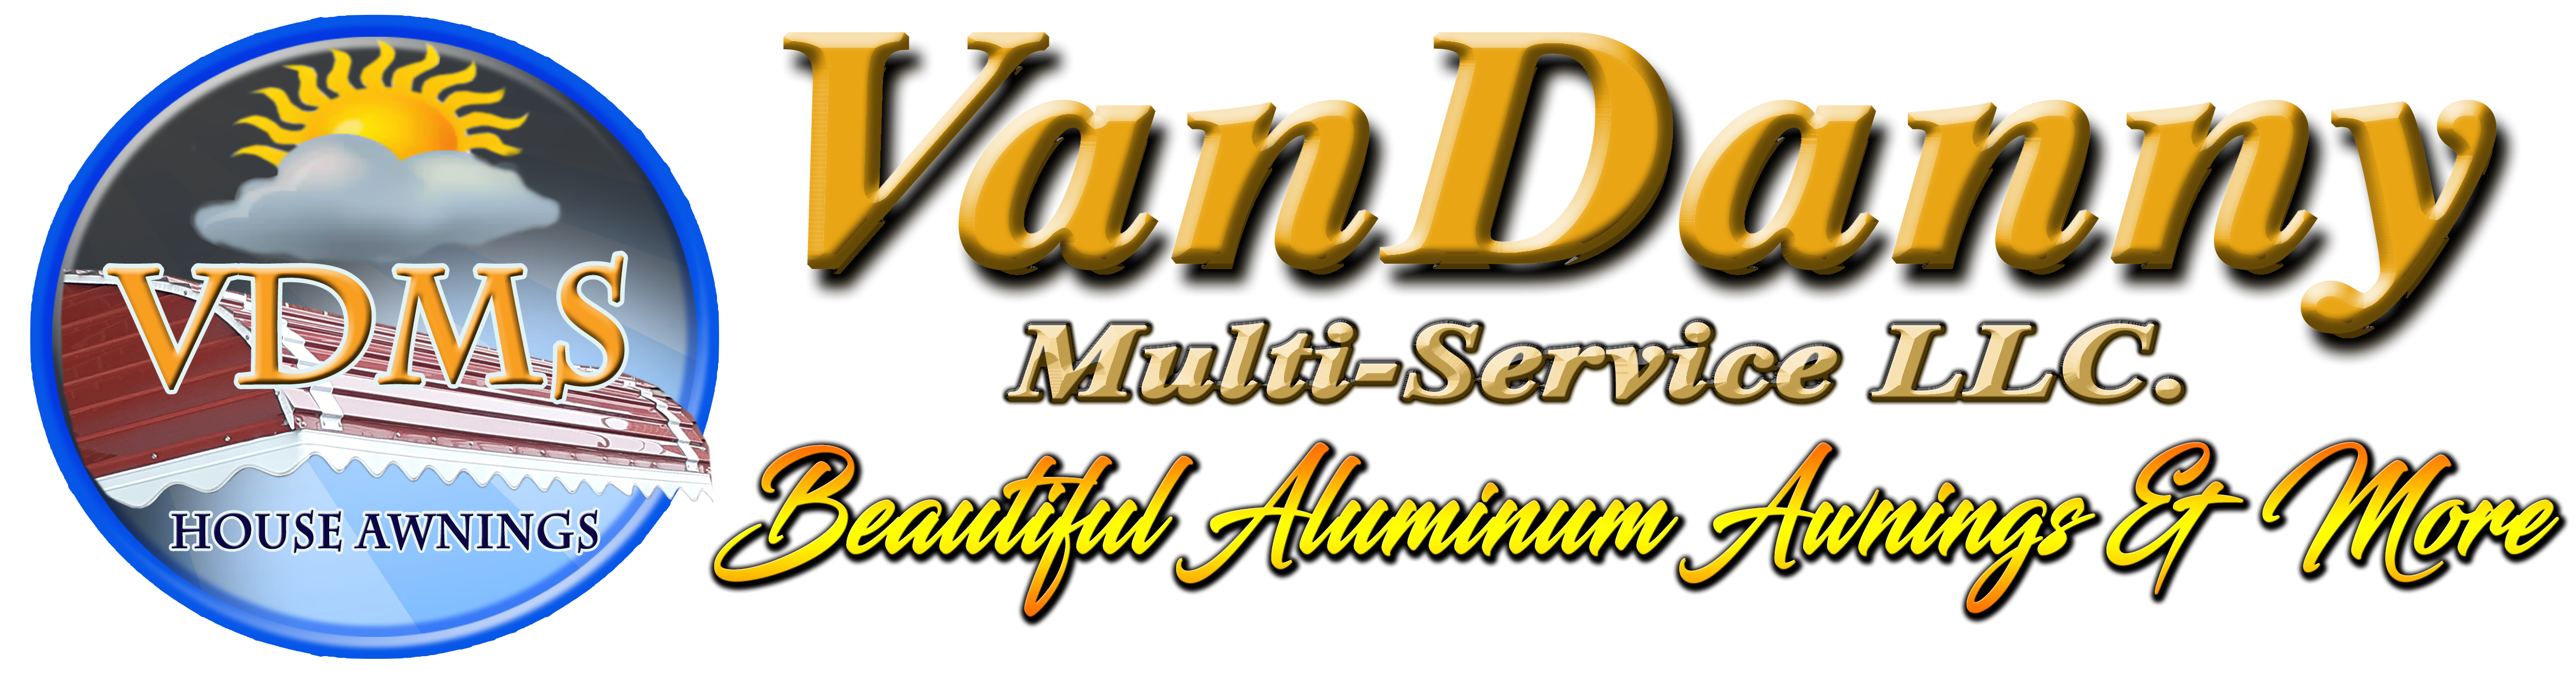 VanDanny Multi Service llc.